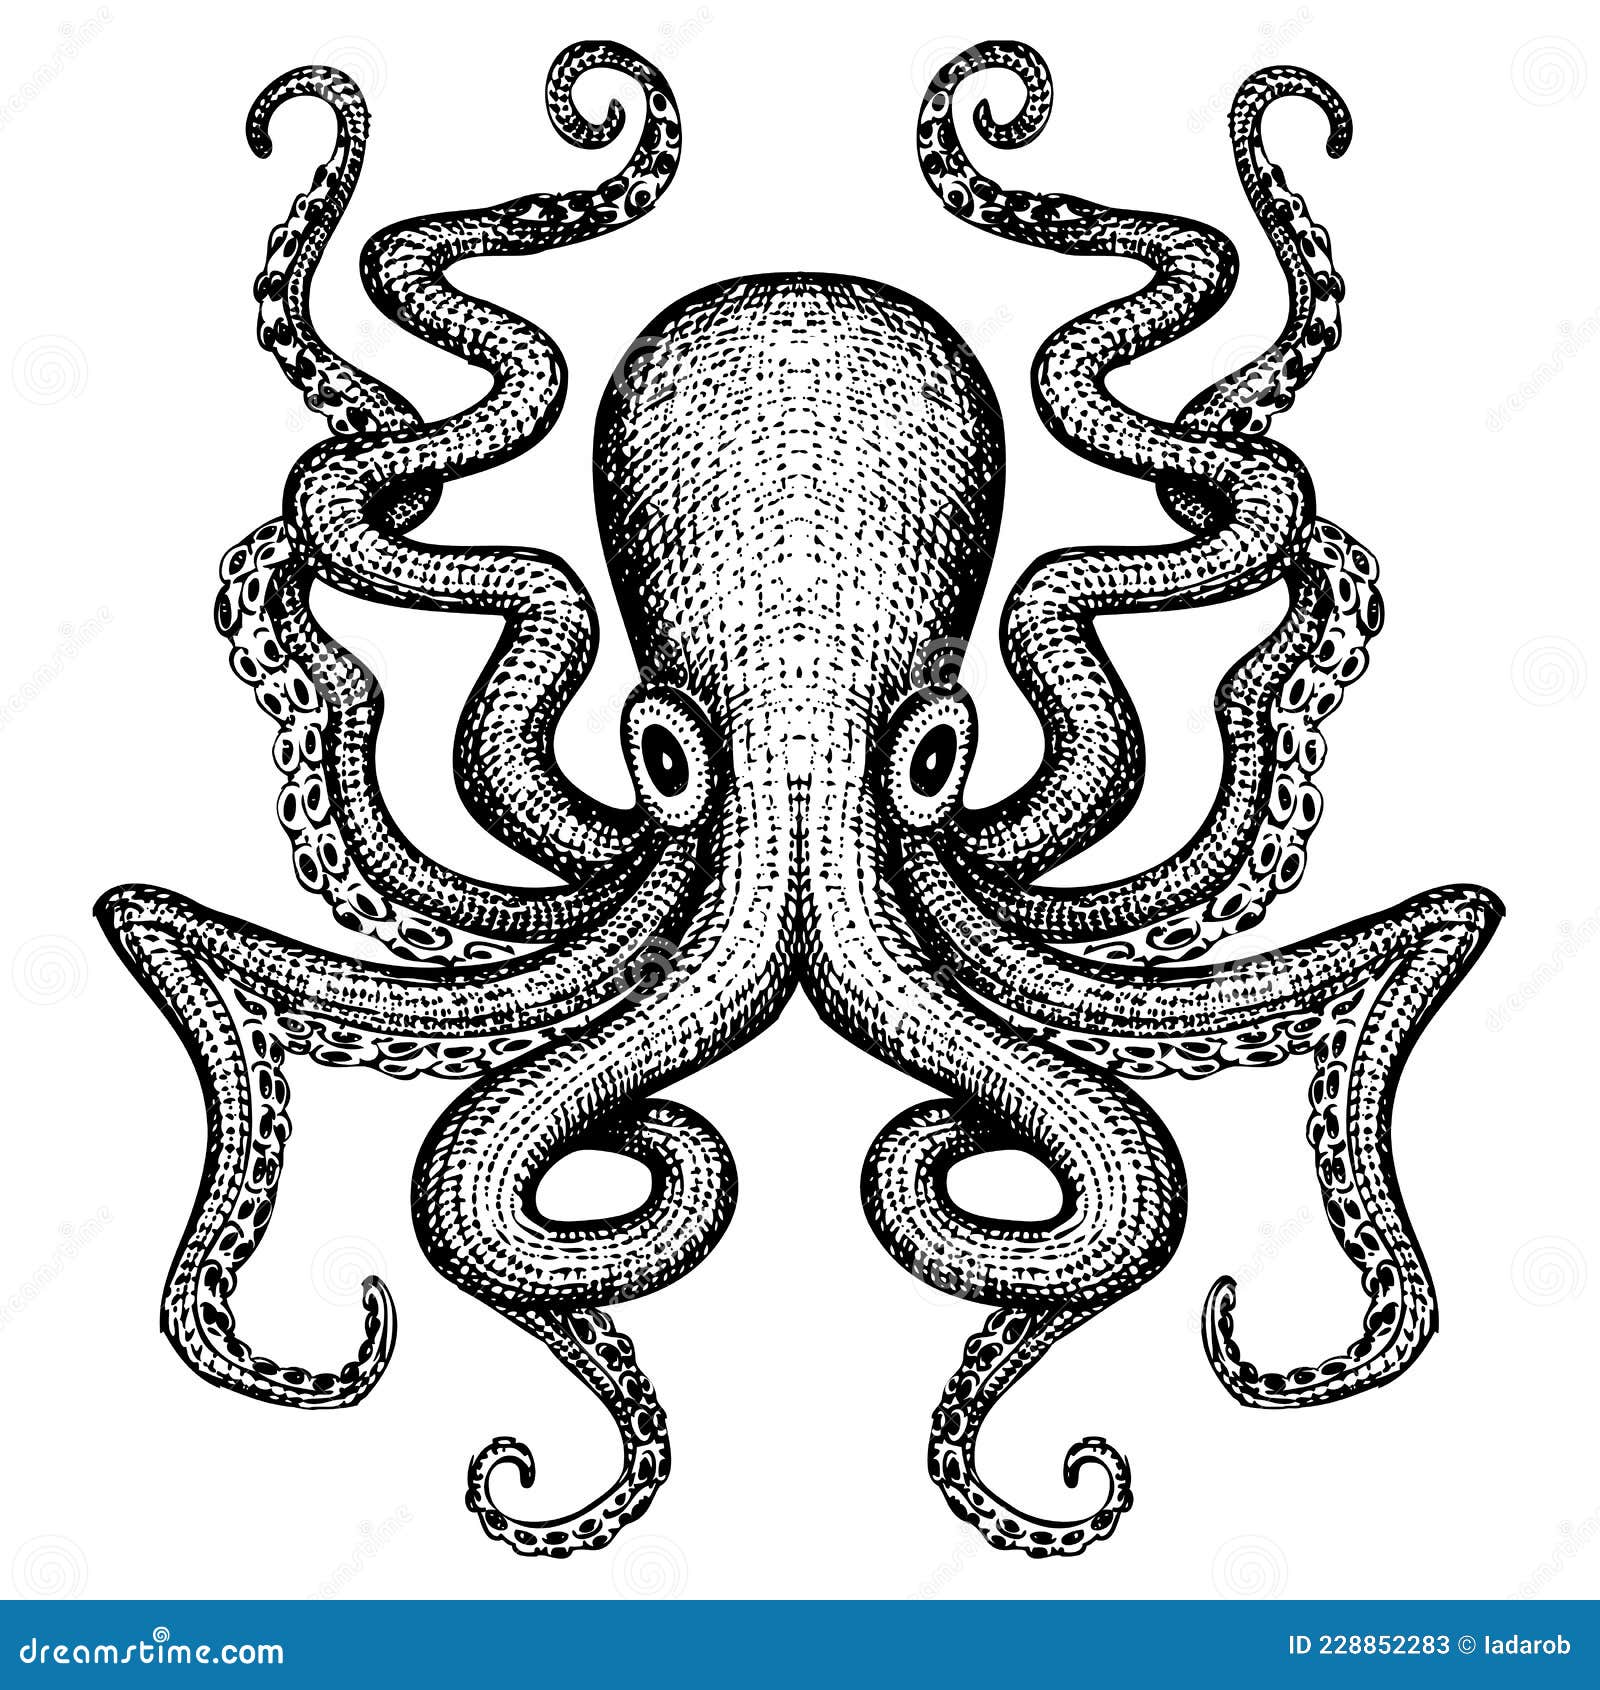 Giant Octopus Sea Monster Illustration Stock Vector - Illustration of ...